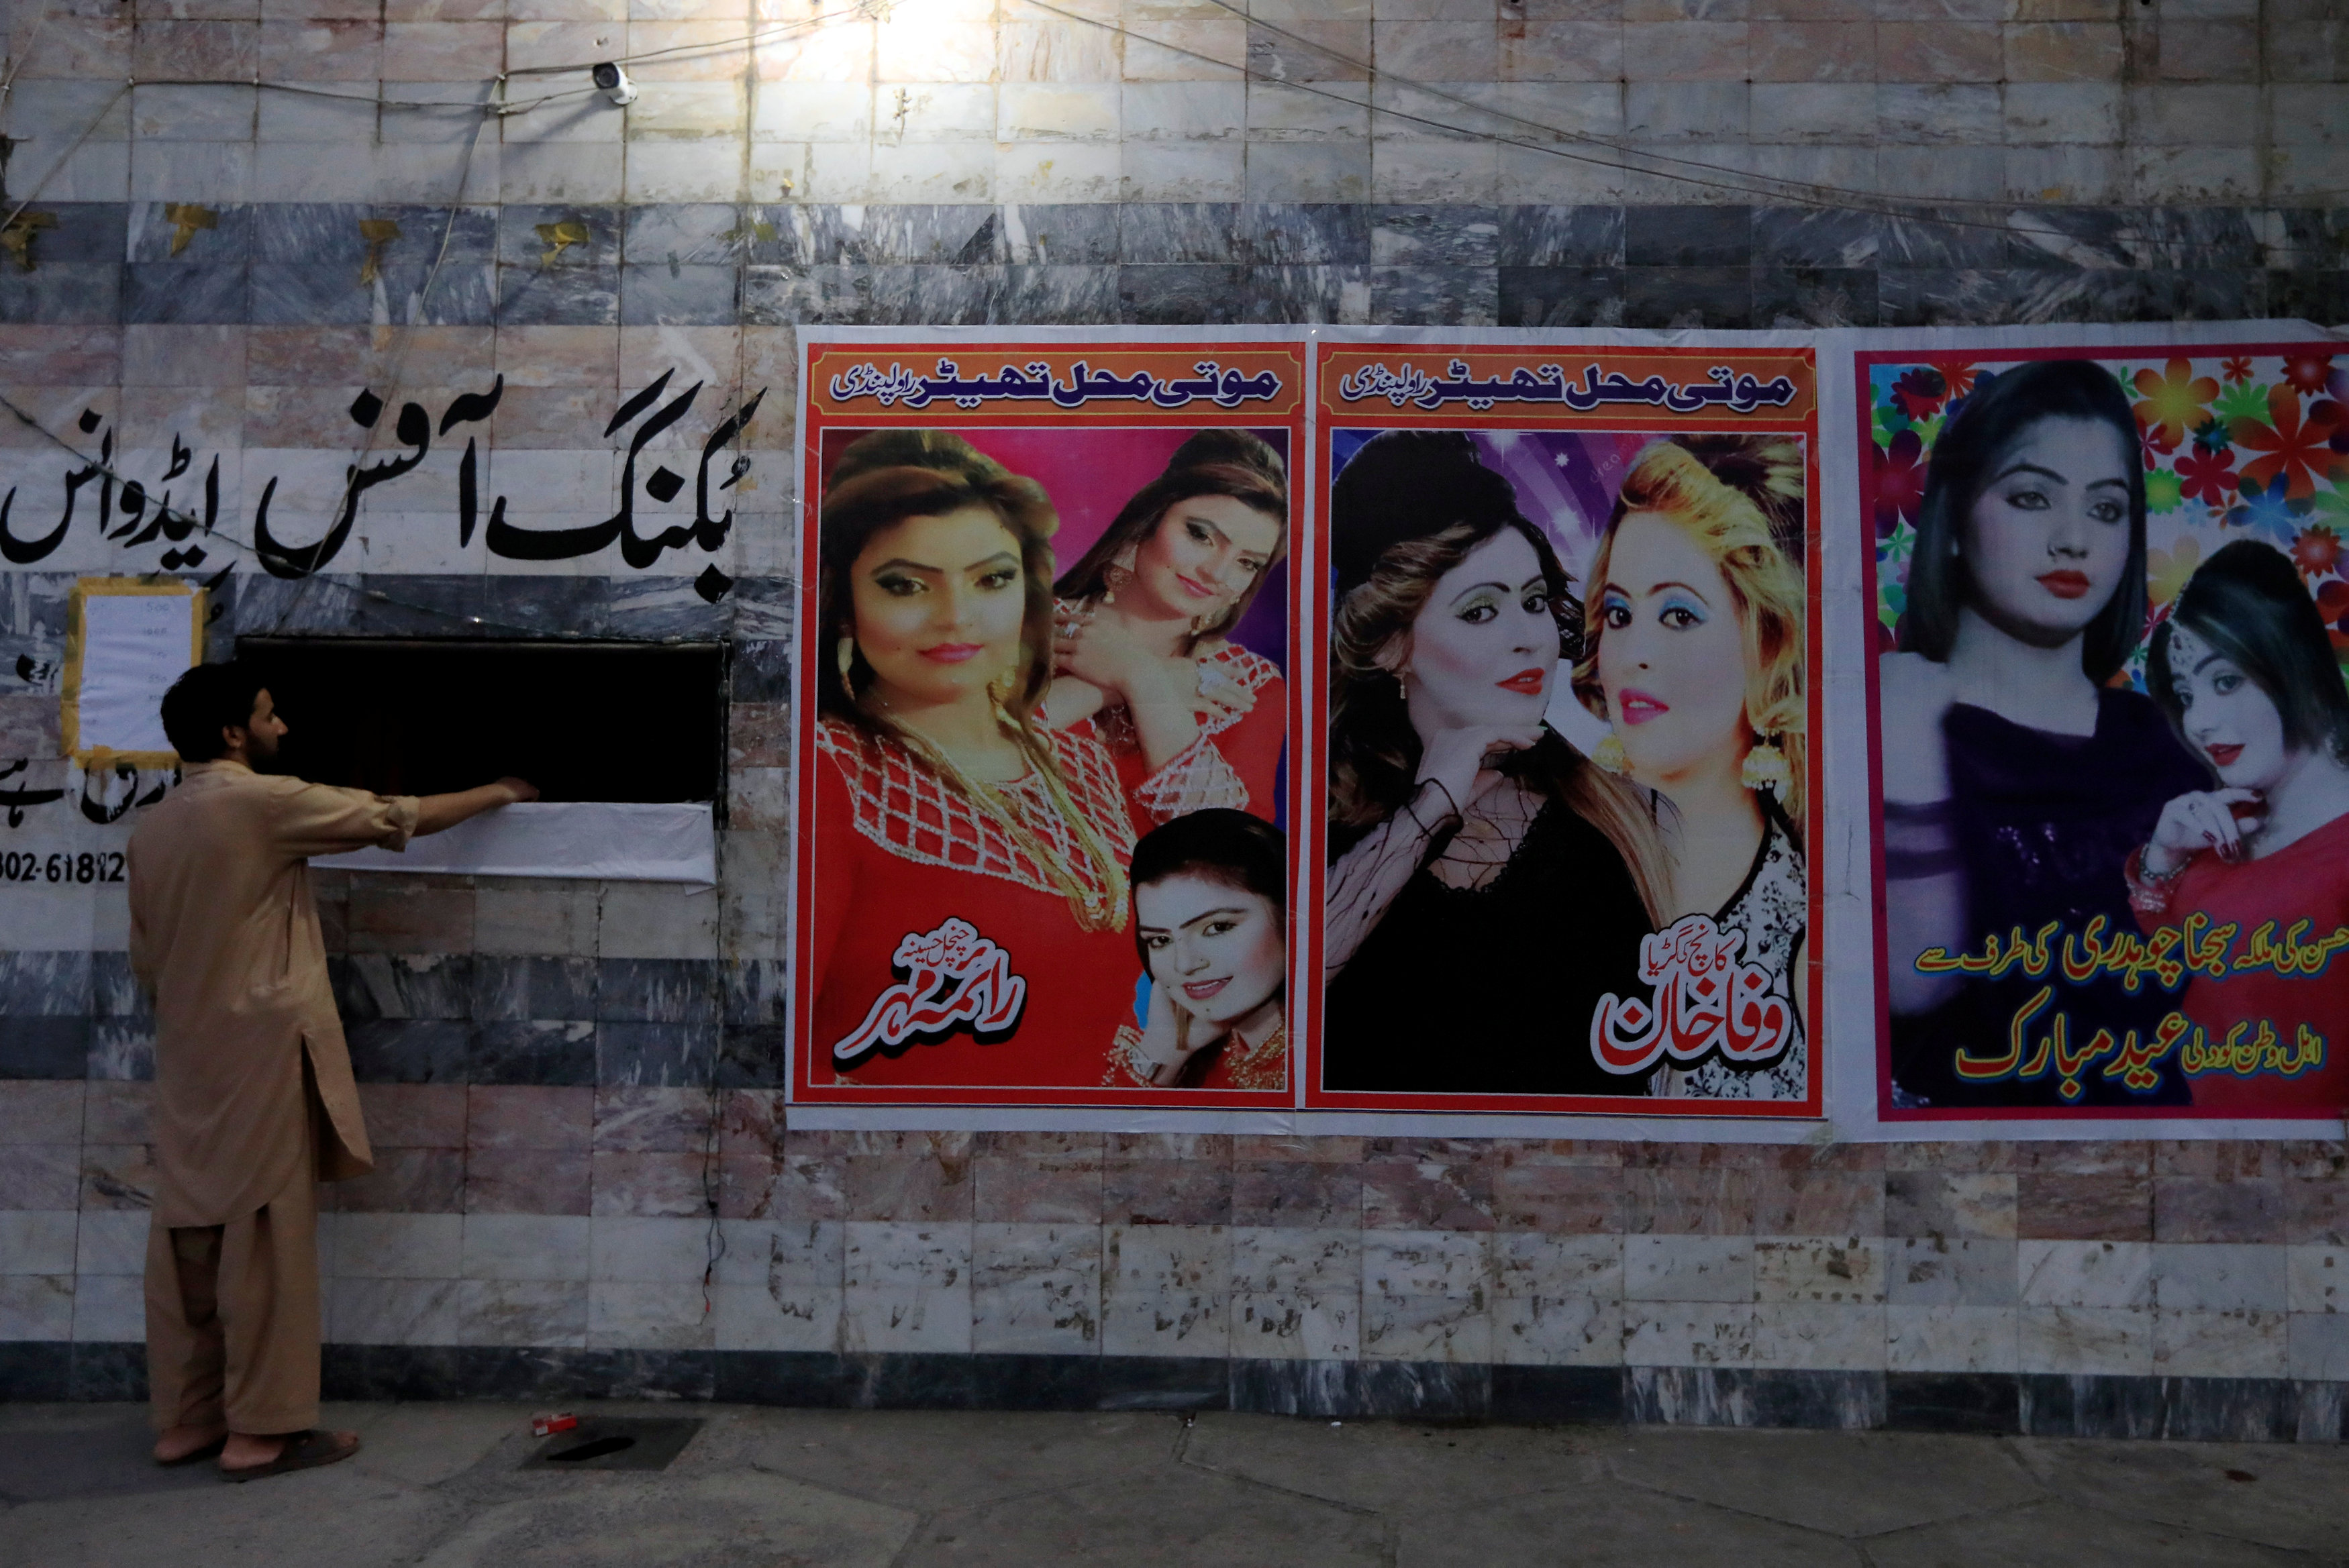 Pakistan: Critics fear Islamism rise as new minister bans ‘vulgar’ billboards